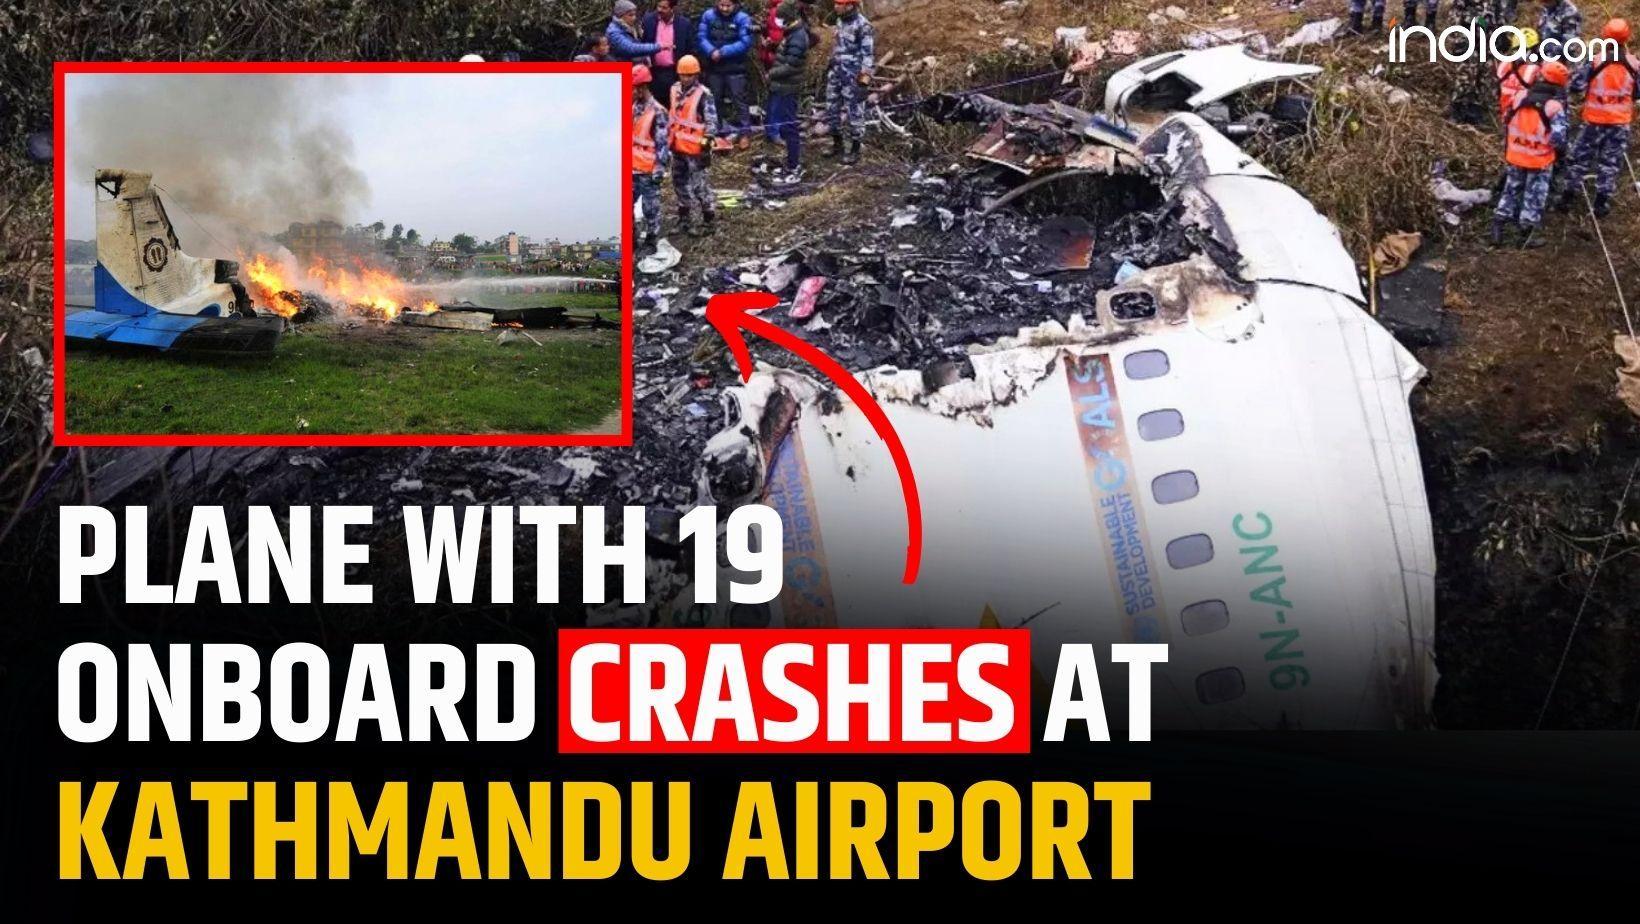 Nepal Plane Crash : Plane With 19 Onboard Crashes During Take-Off At Kathmandu Airport